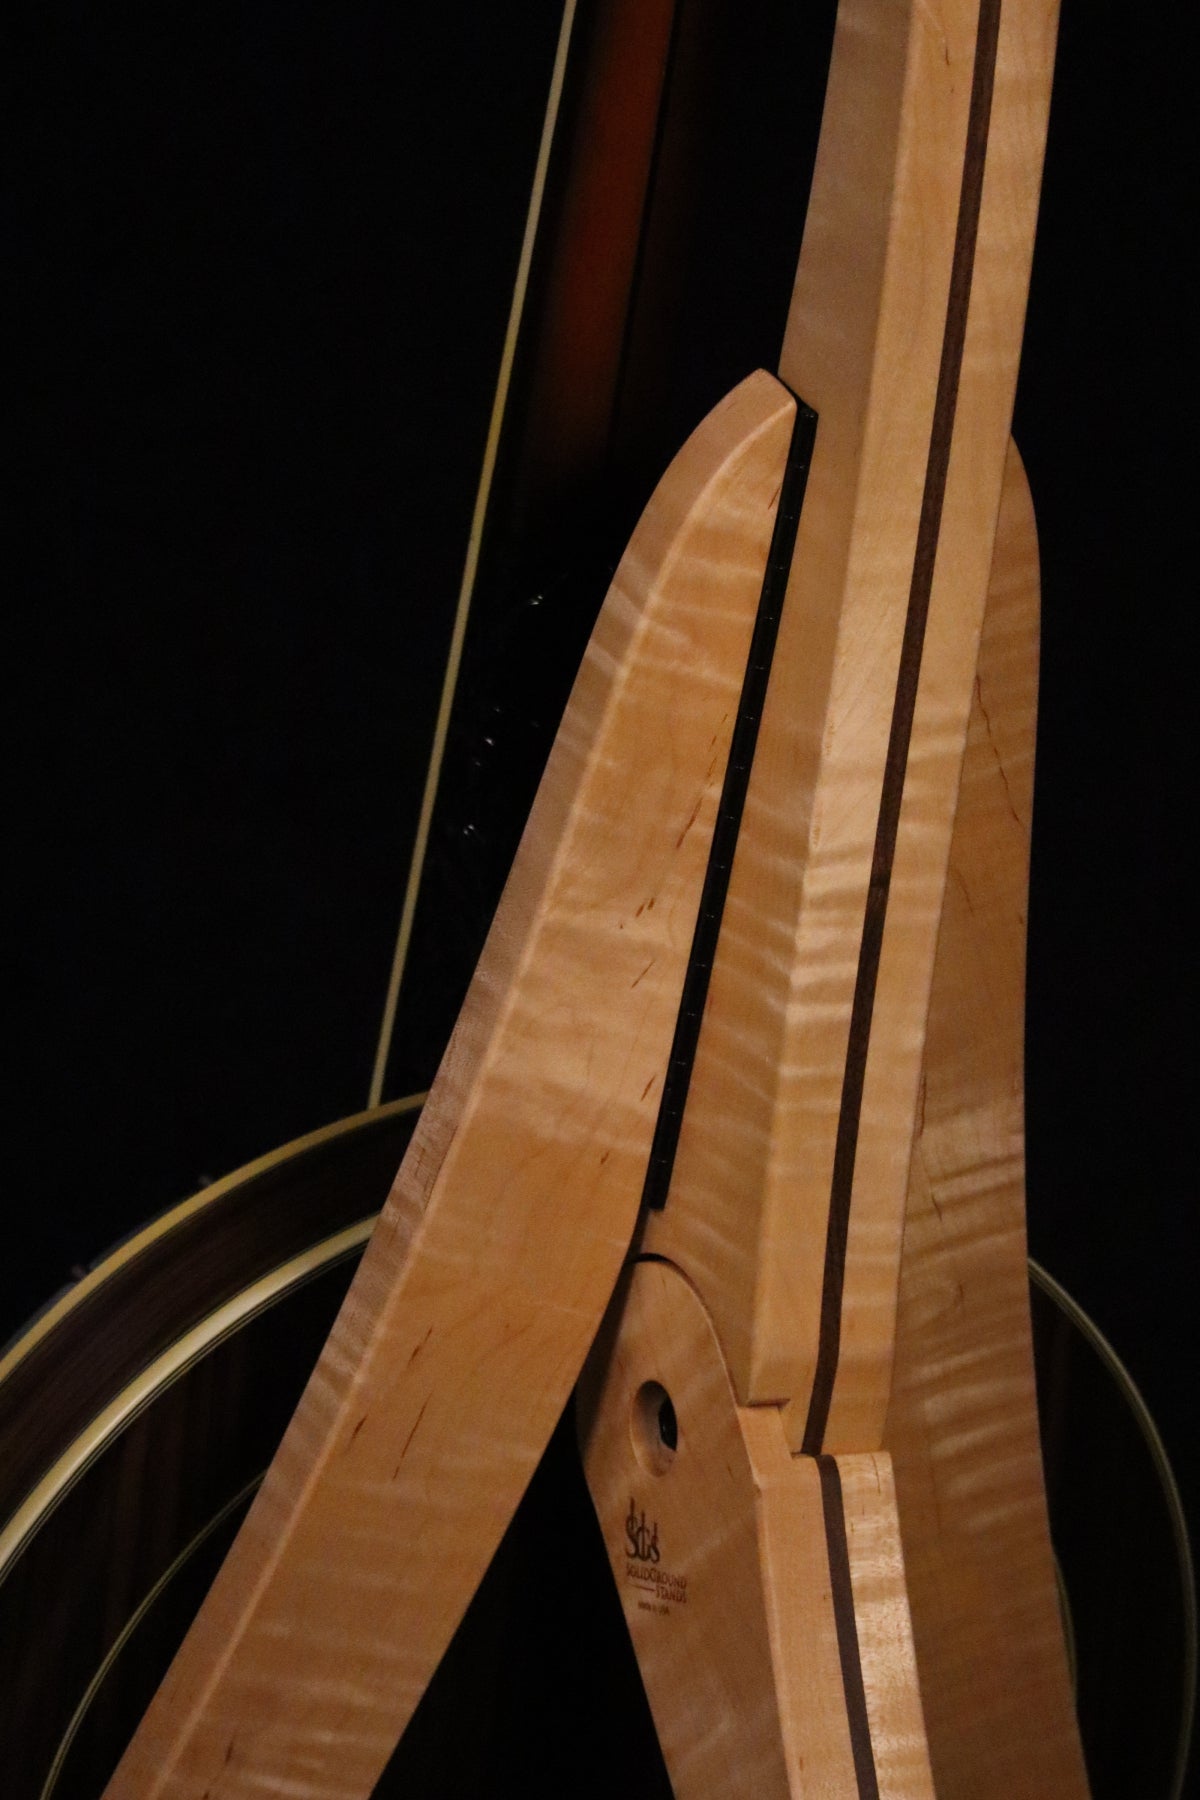 Folding curly maple and walnut wood banjo floor stand closeup rear image with Alvarez banjo